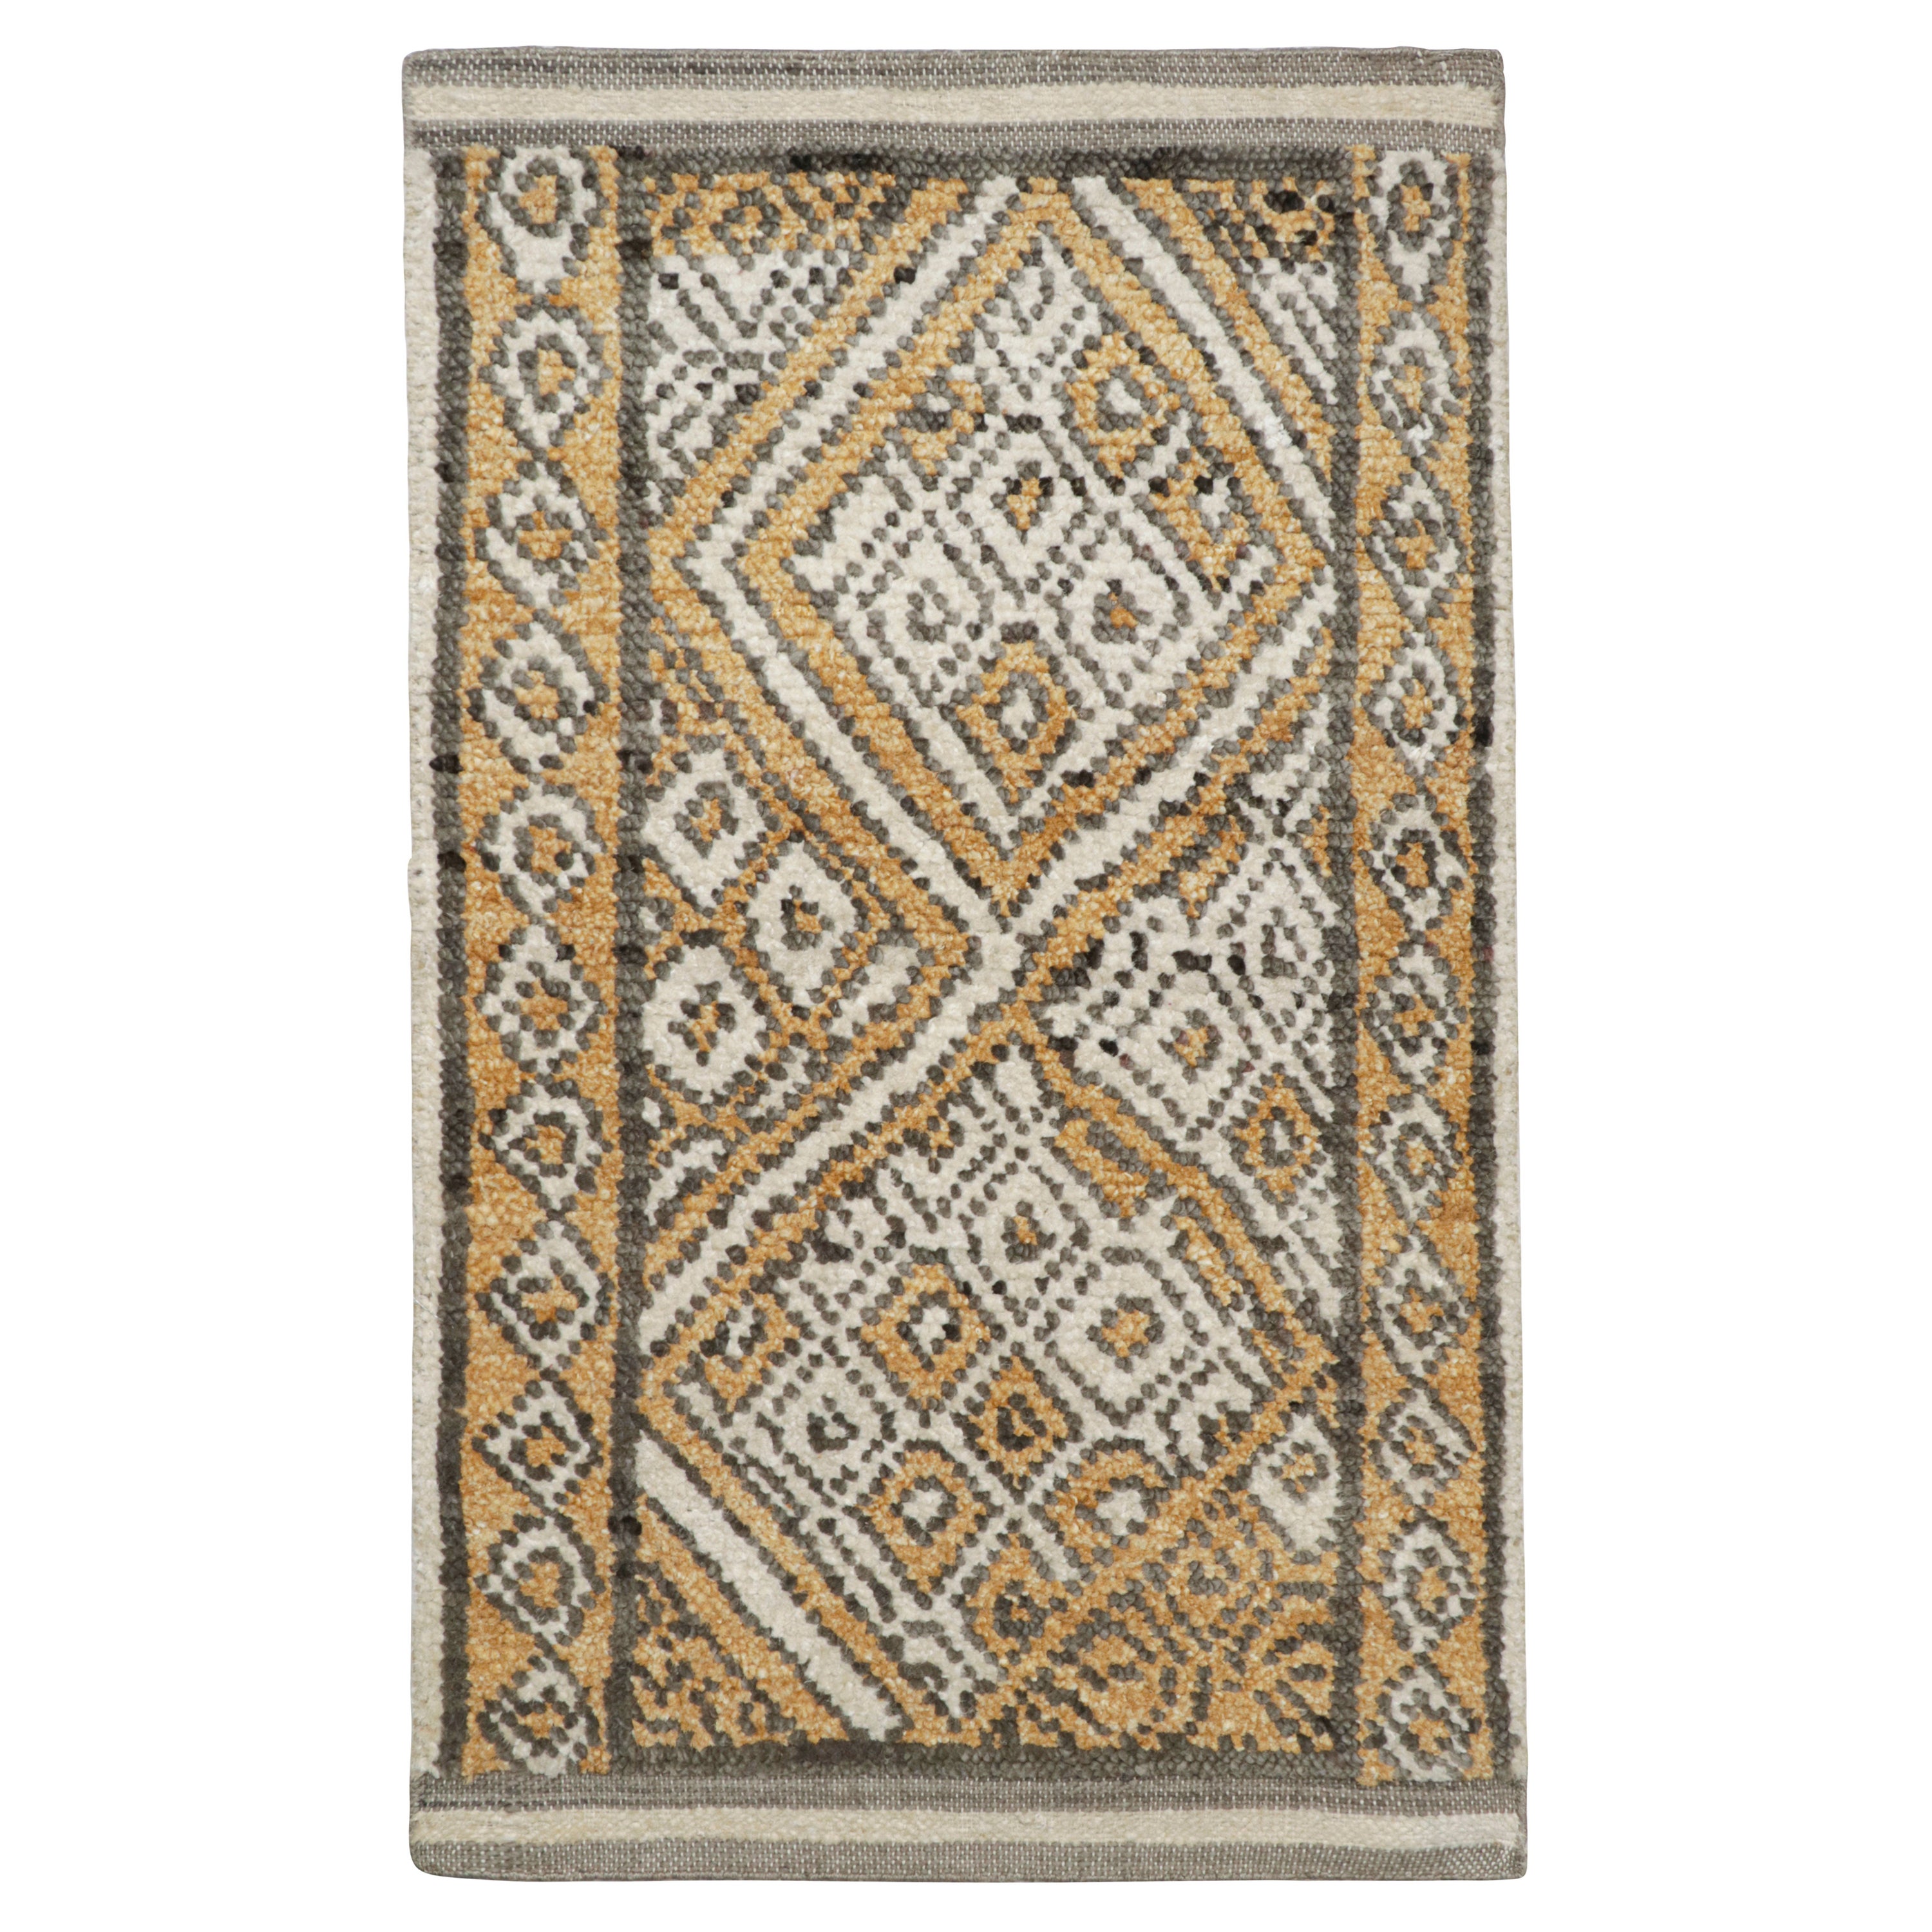 Rug & Kilim’s Moroccan Style Rug with Geometric Lozenge Diamond Patterns